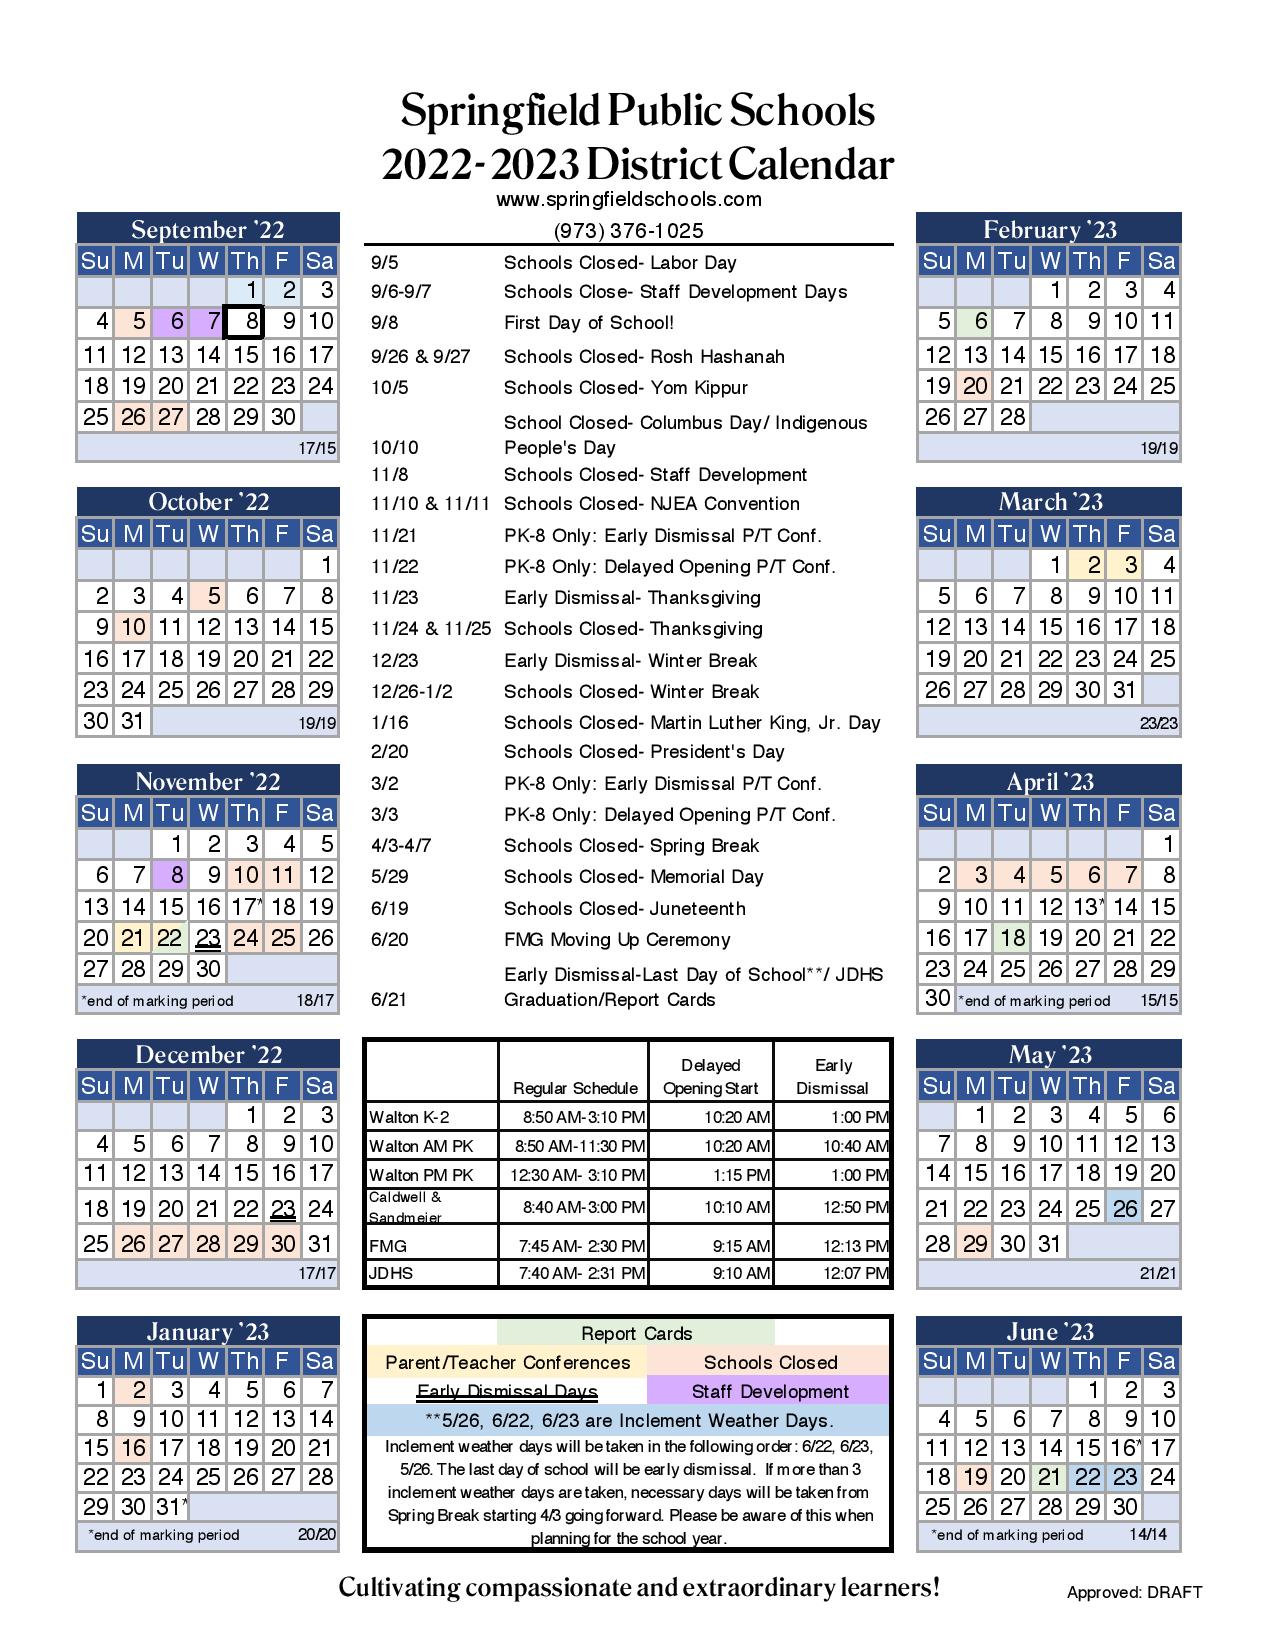 Springfield Public Schools Calendar Holidays 2023 2024